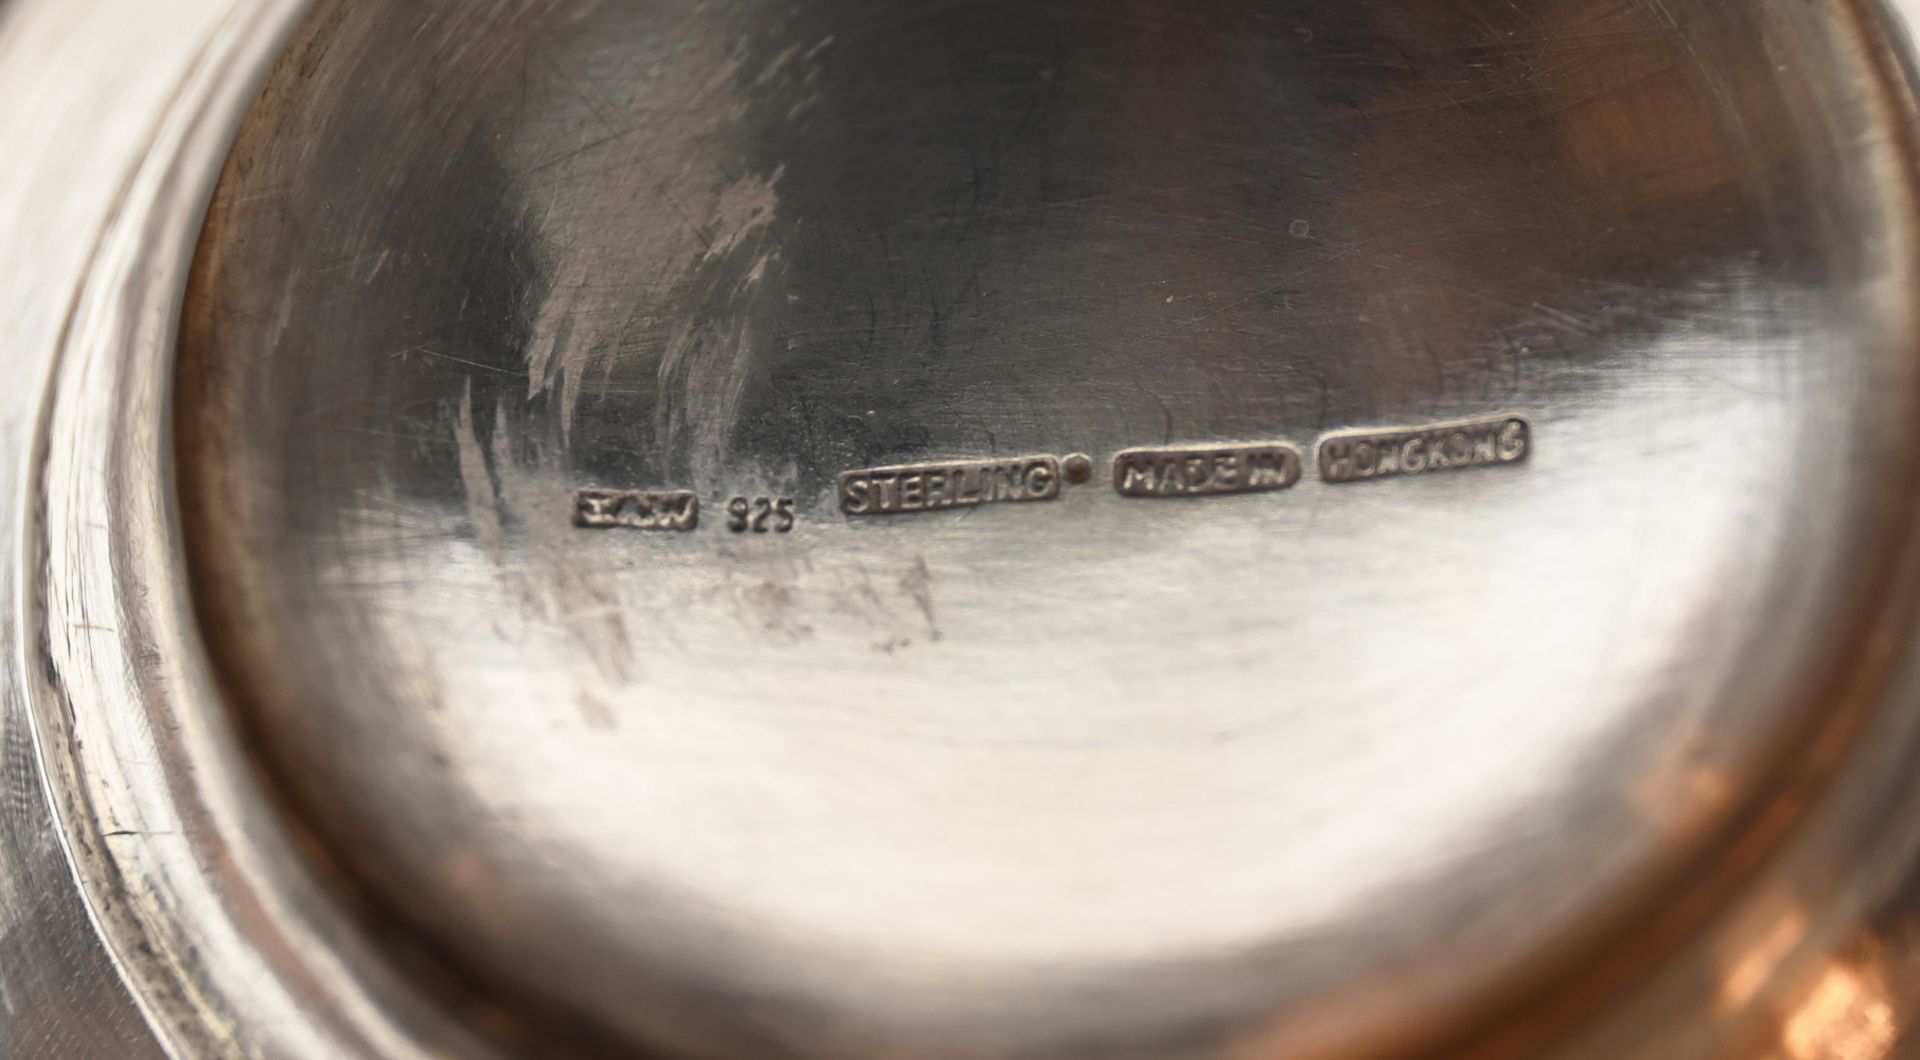 1 Kanne Silber gepunzt Sterling/925 bez. "Made in Hongkong/J.A.W." H ca. 24cm, Holzgriff/-knauf je - Bild 2 aus 2